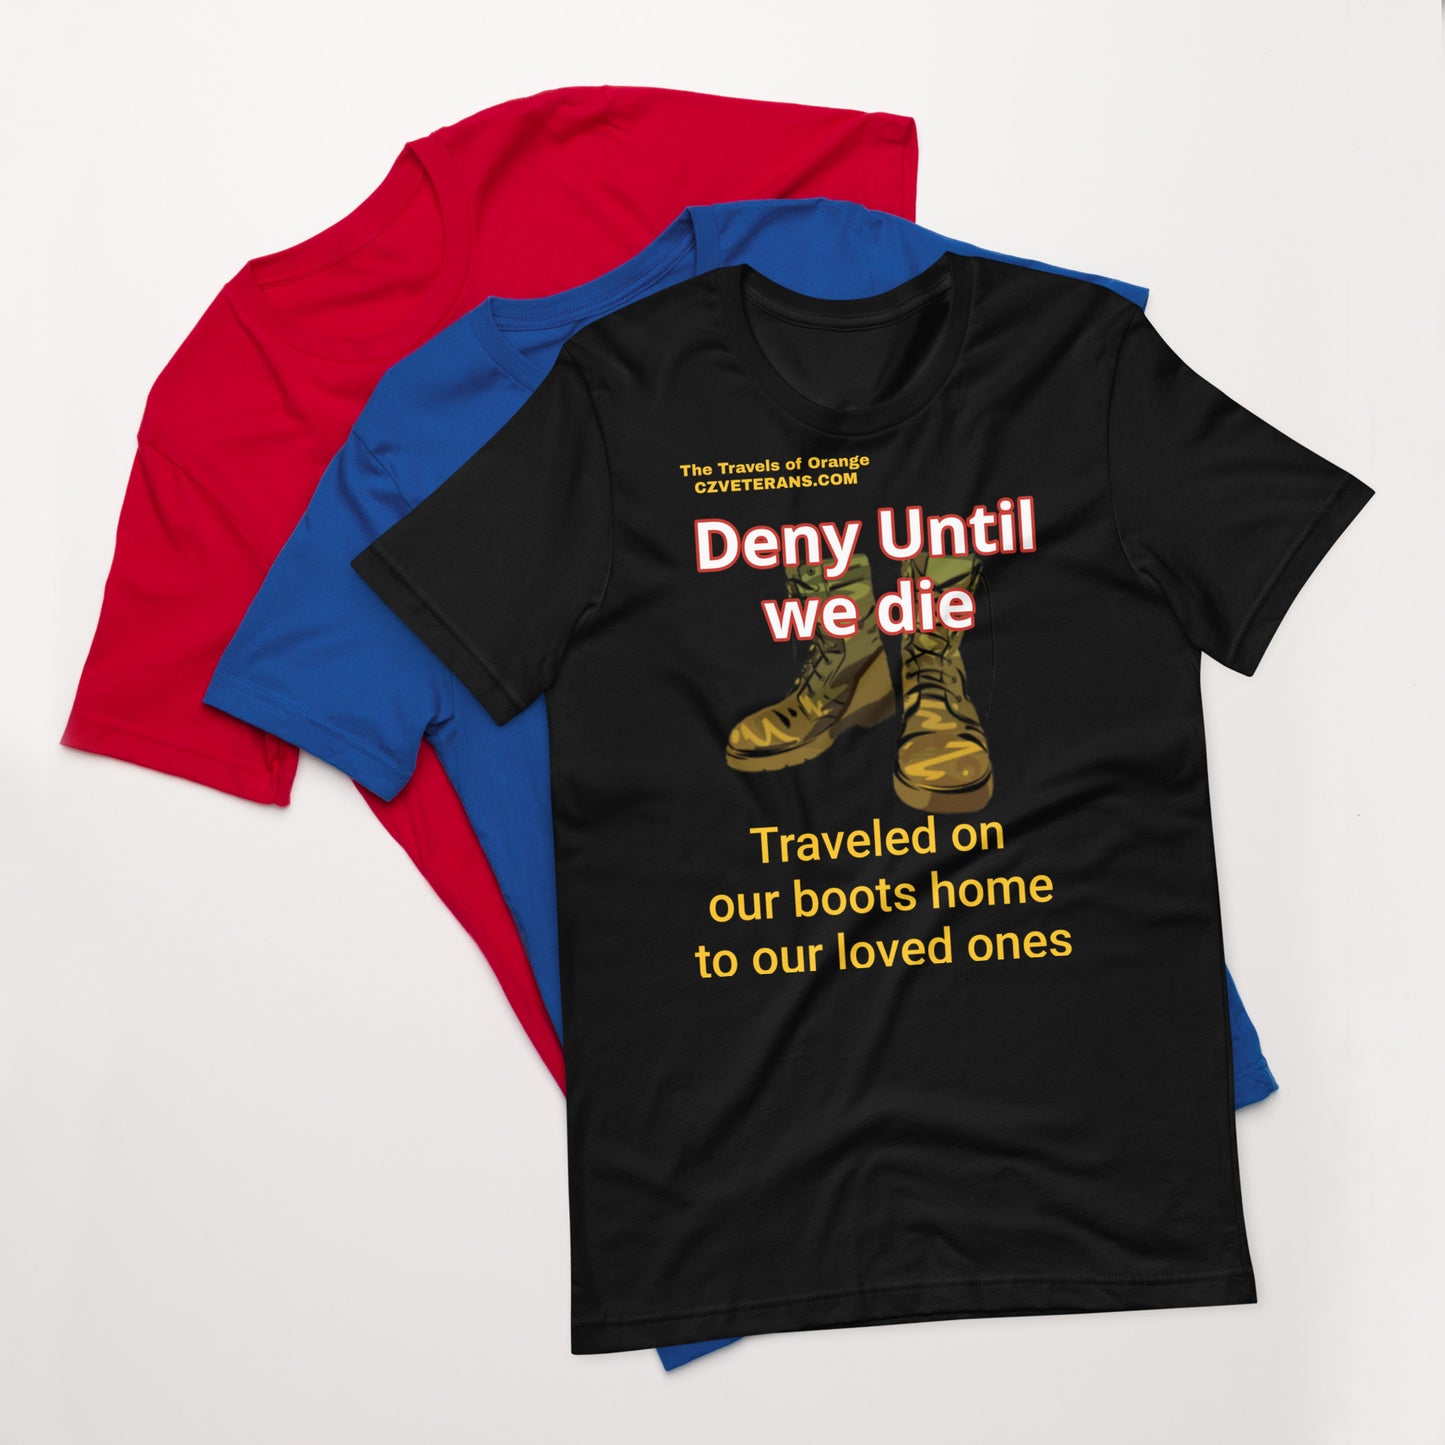 Panama Canal Zone veteran - Unisex t-shirt for both Men or Women